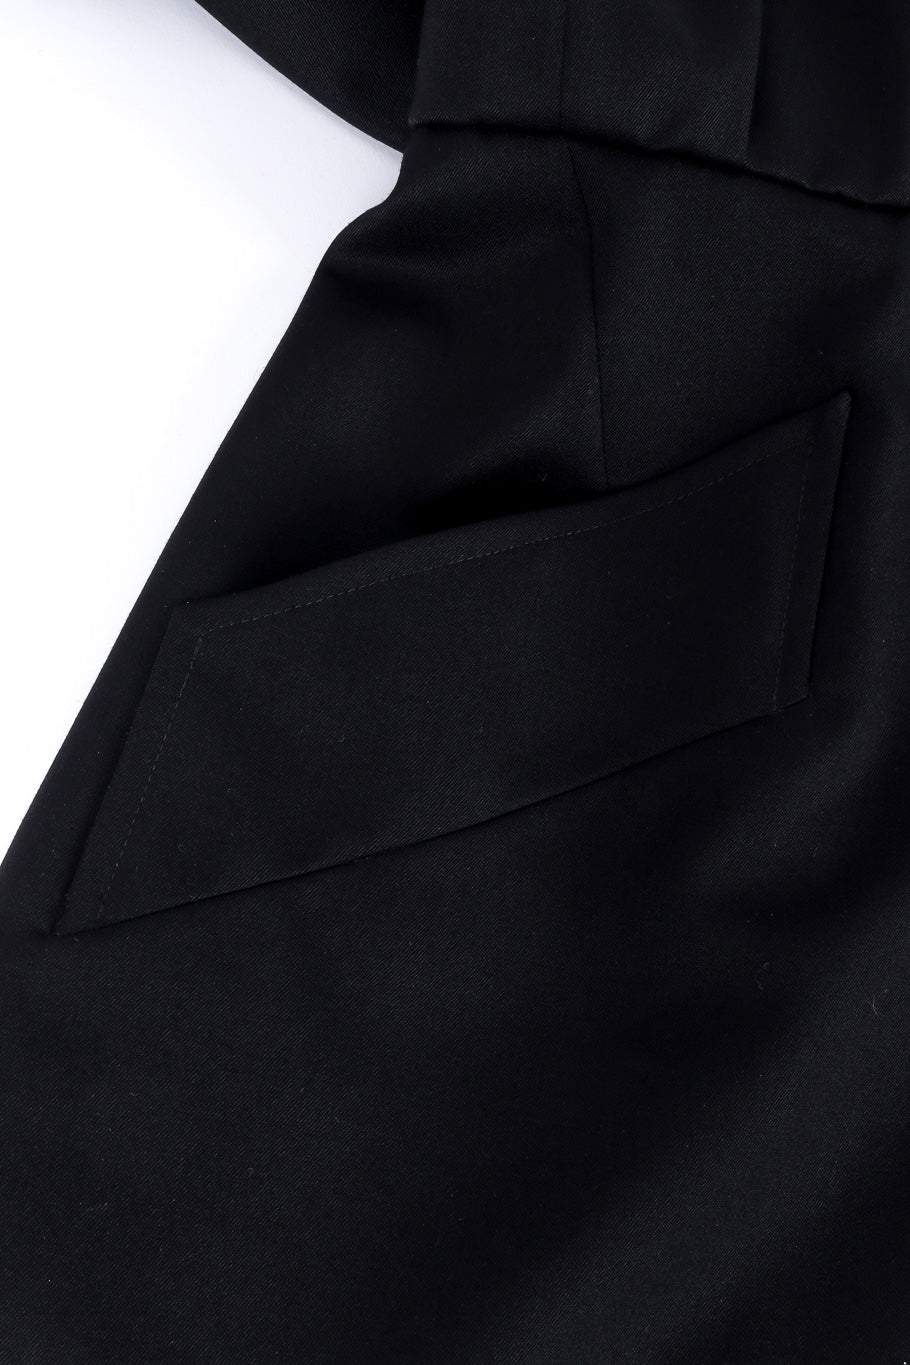 Vintage Yves Saint Laurent Collared Blazer Dress welt pocket closeup @Recessla